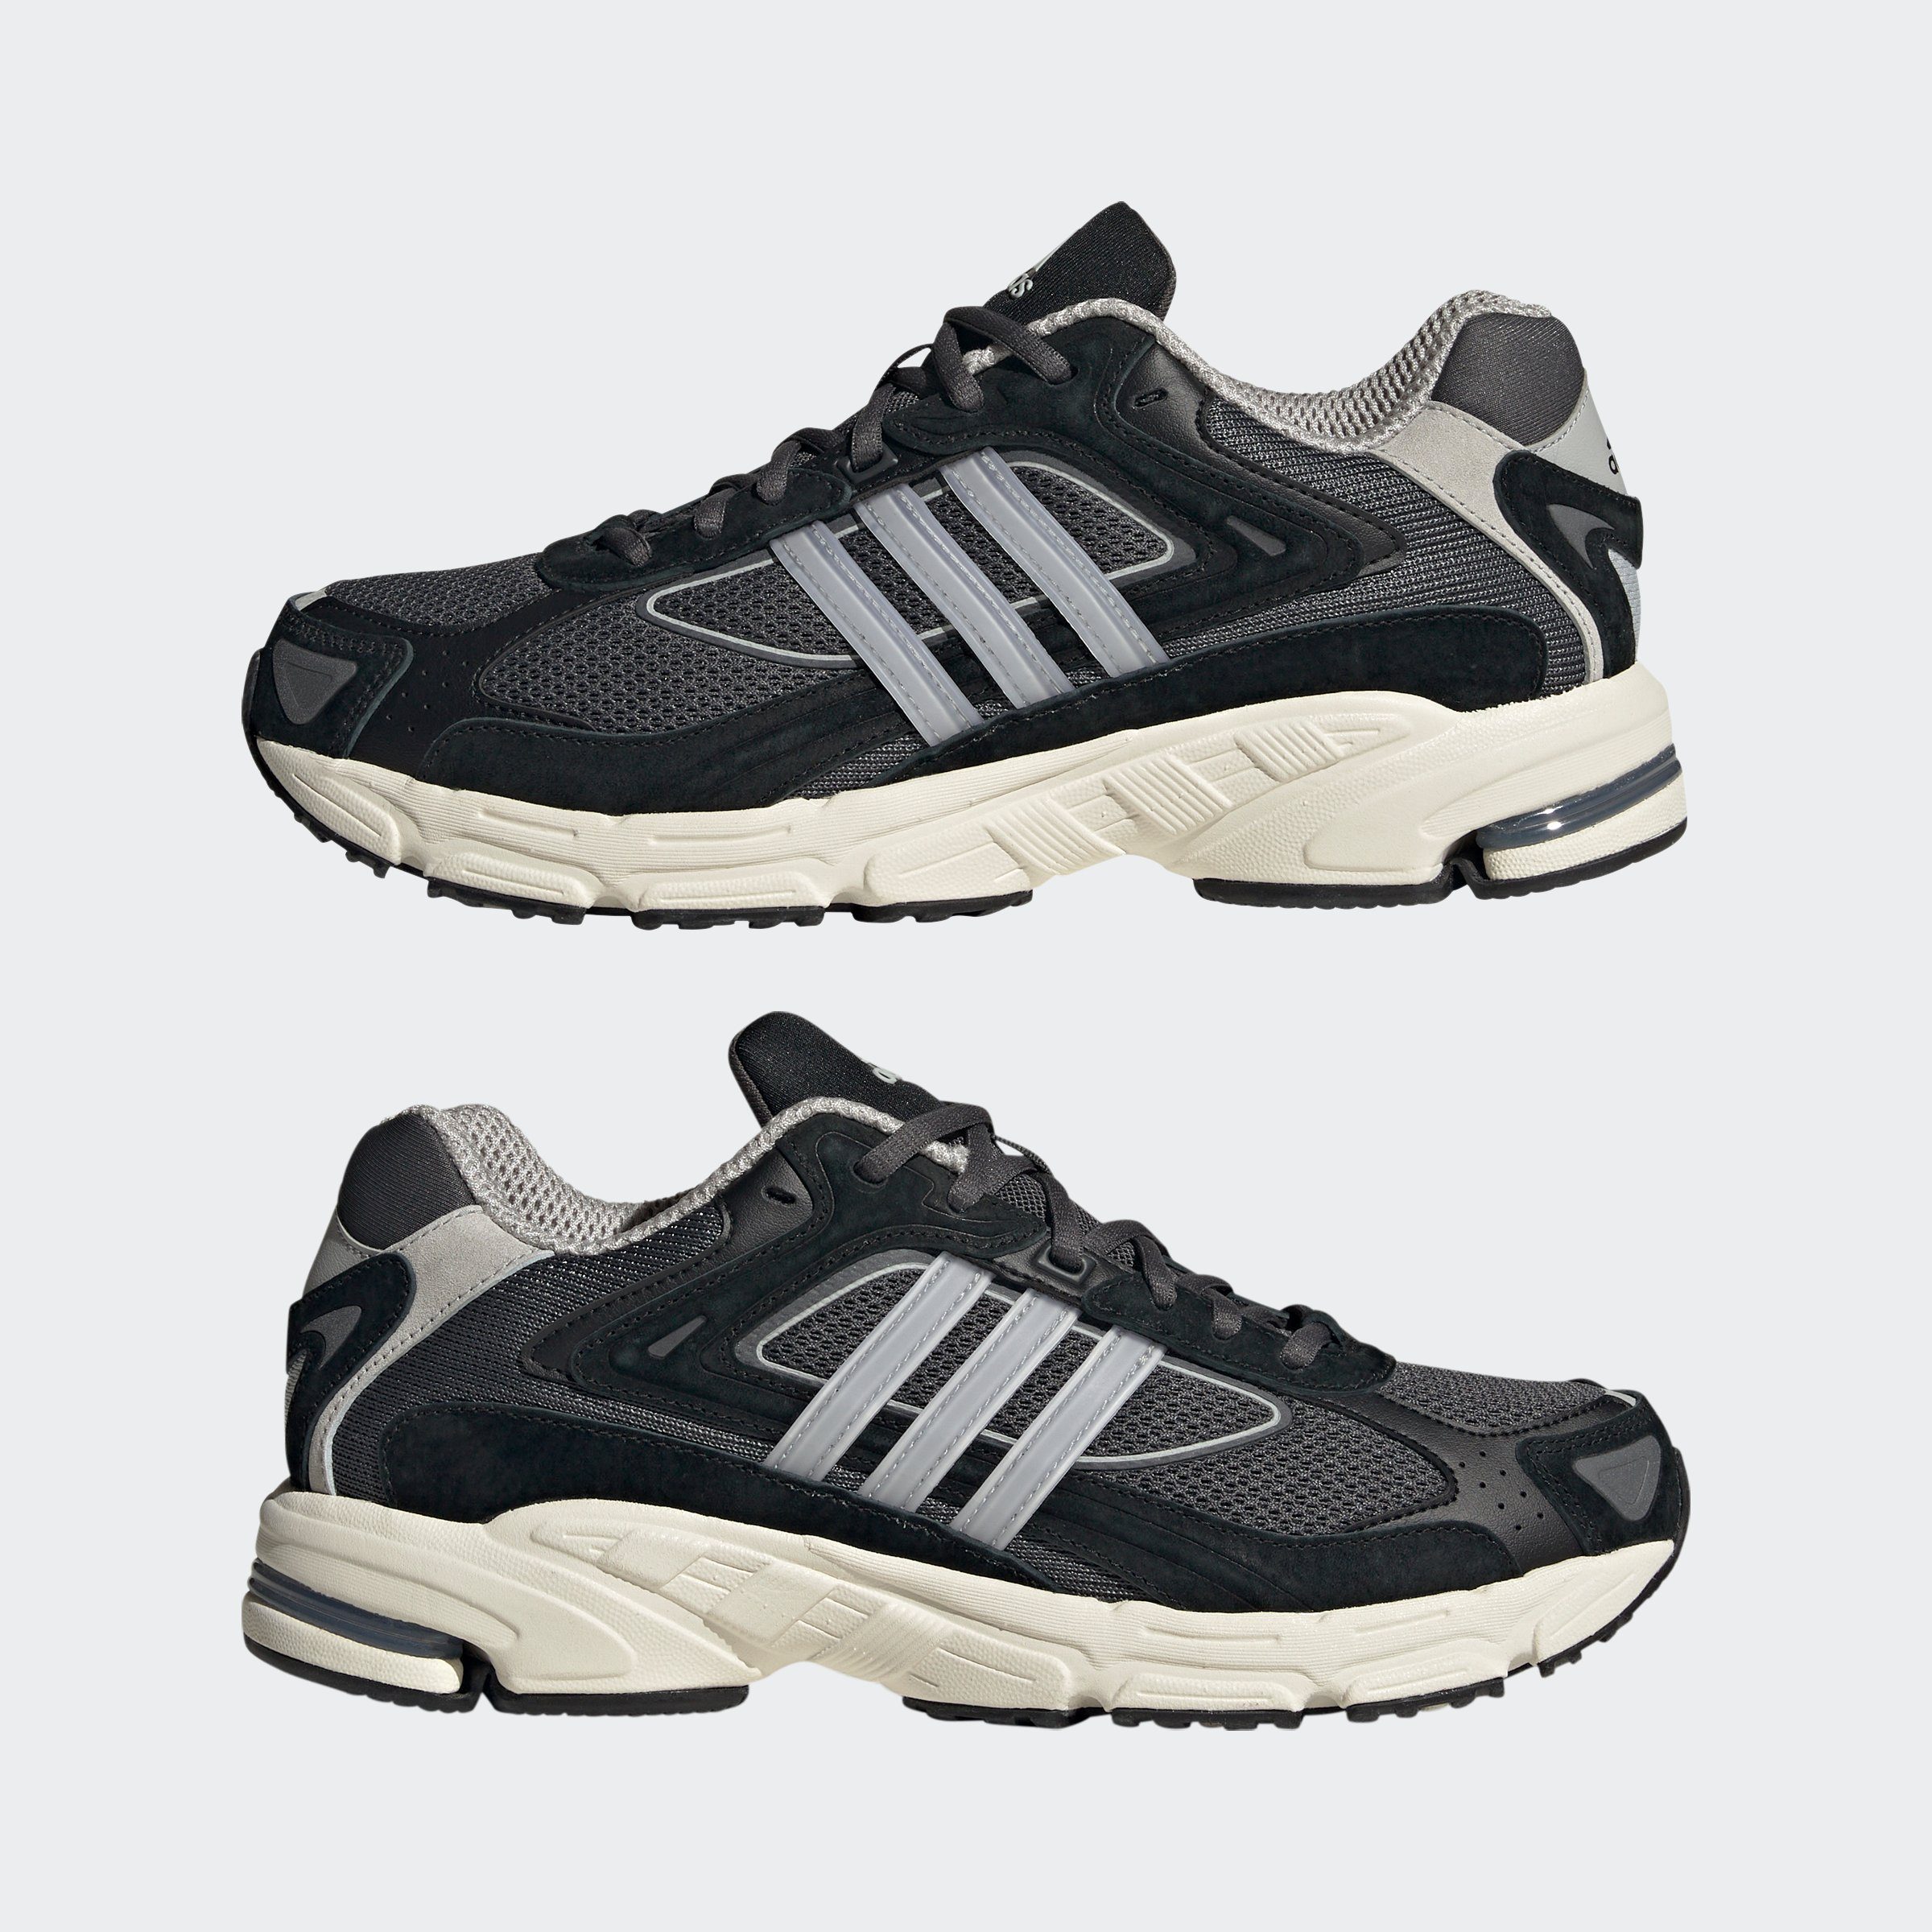 Core CL Grey Sneaker adidas Two Originals Black / RESPONSE / Six Grey